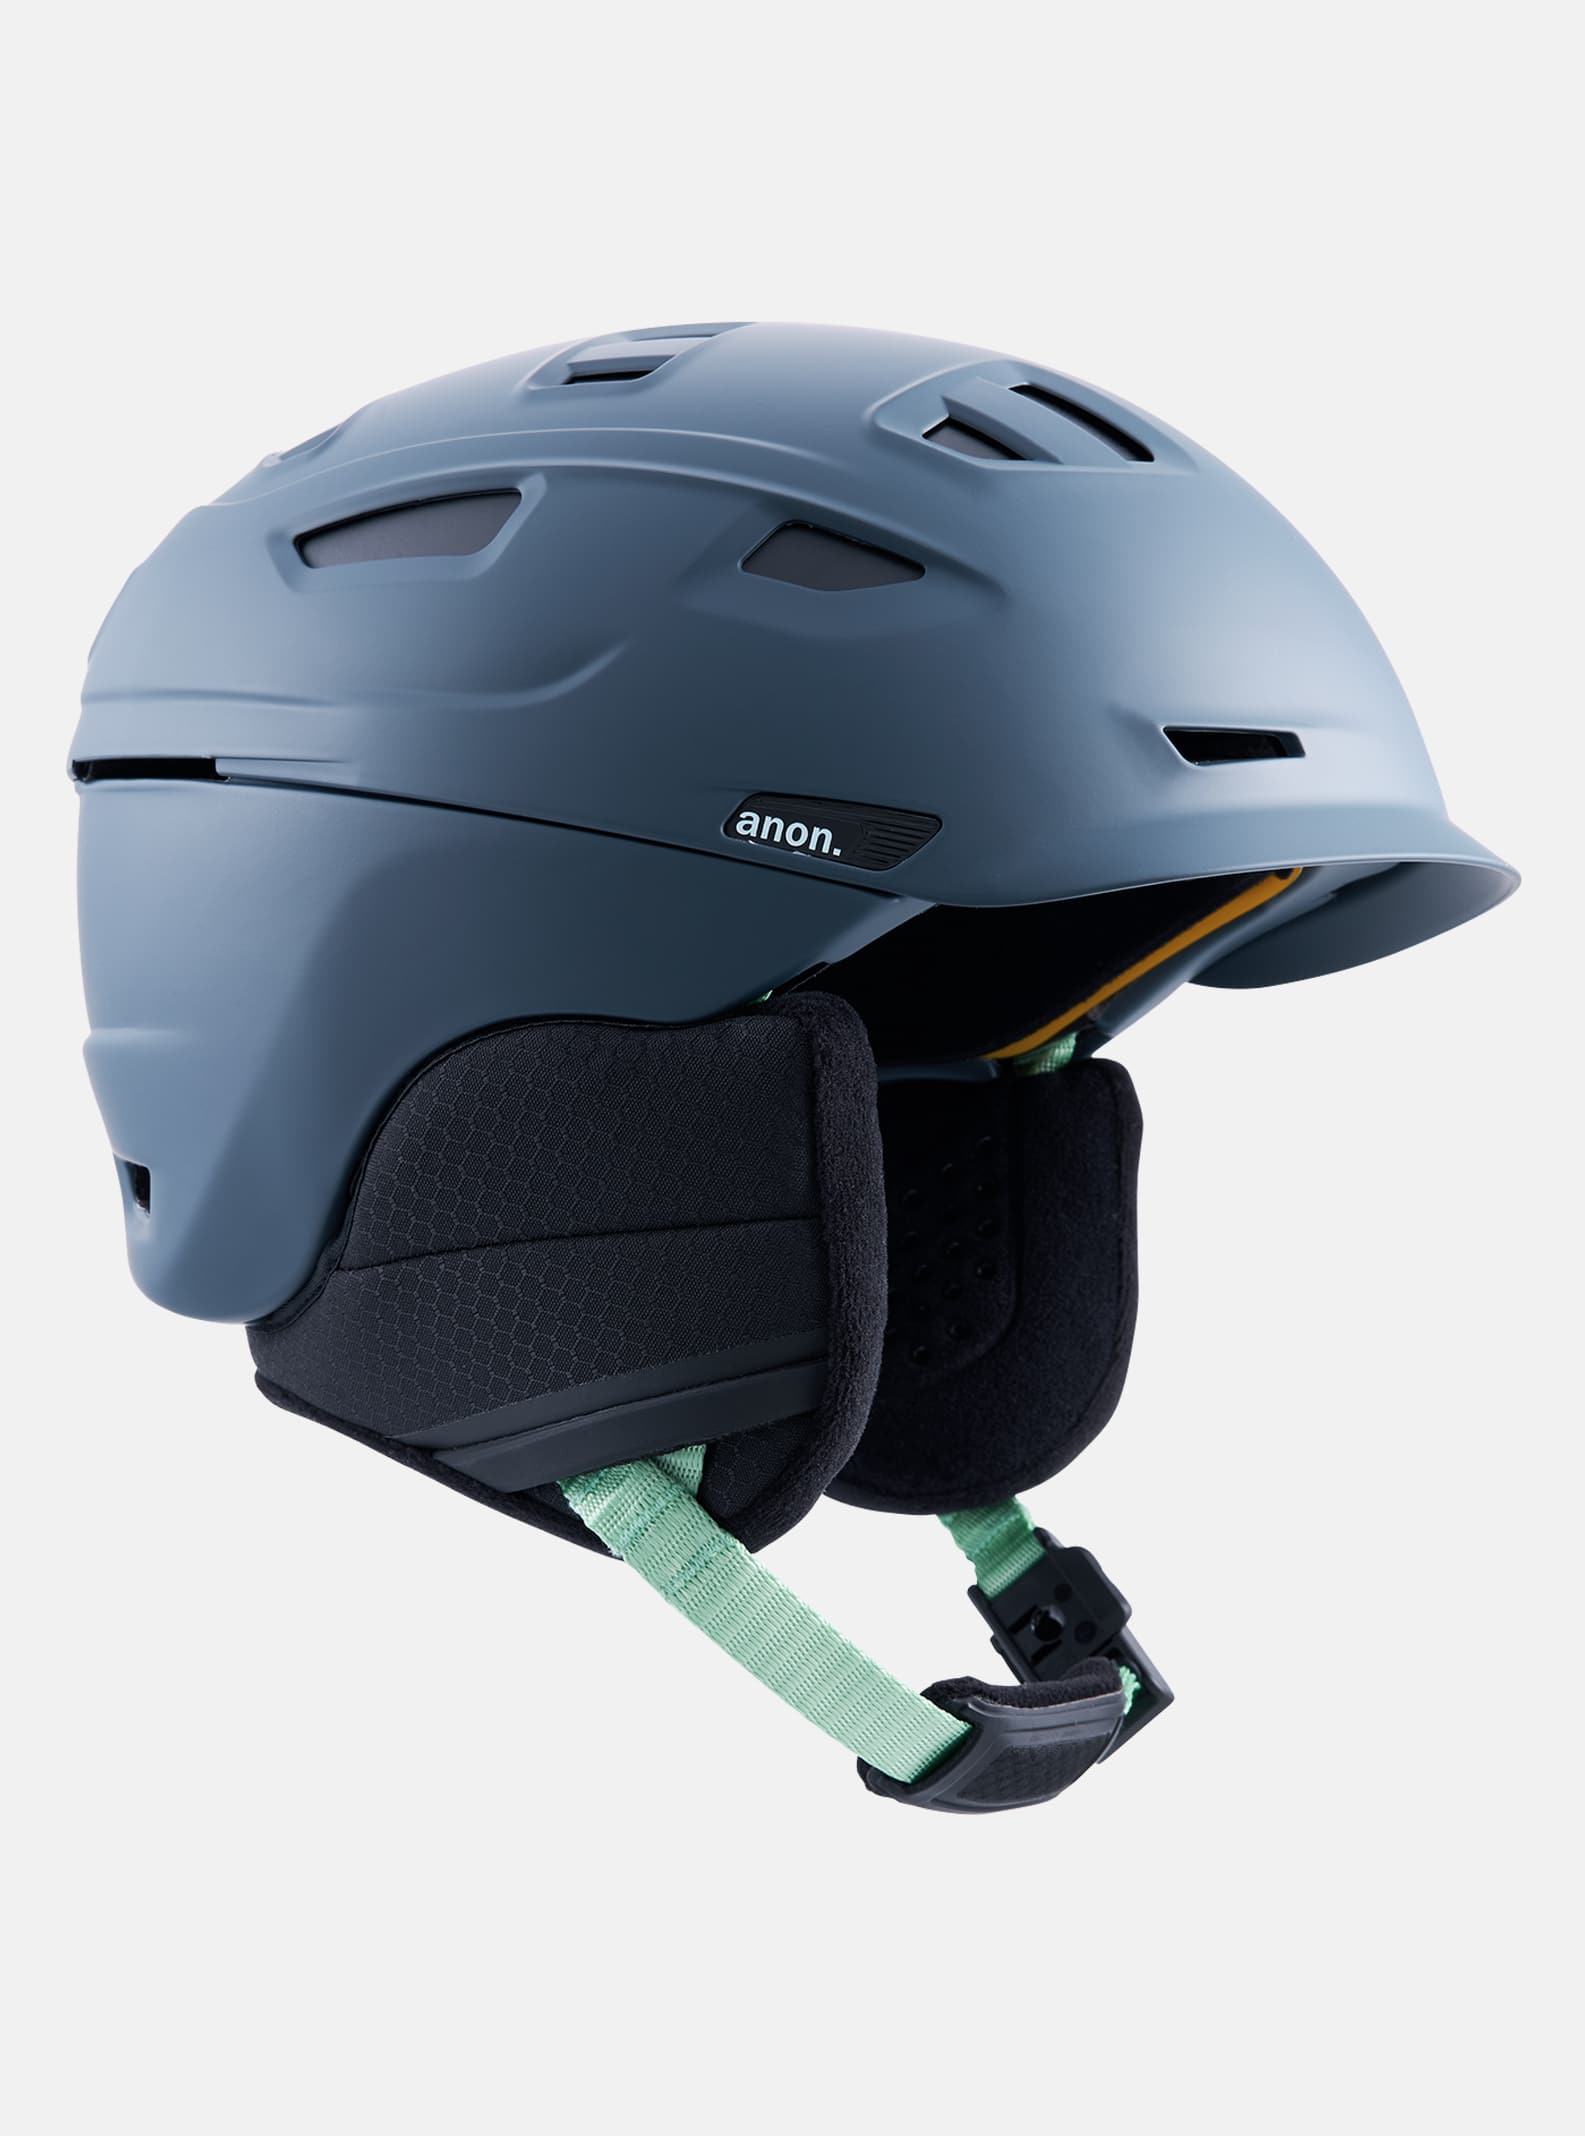 Anon Prime MIPS® Ski & Snowboard Helmet | Anon Optics Winter 2023 PT